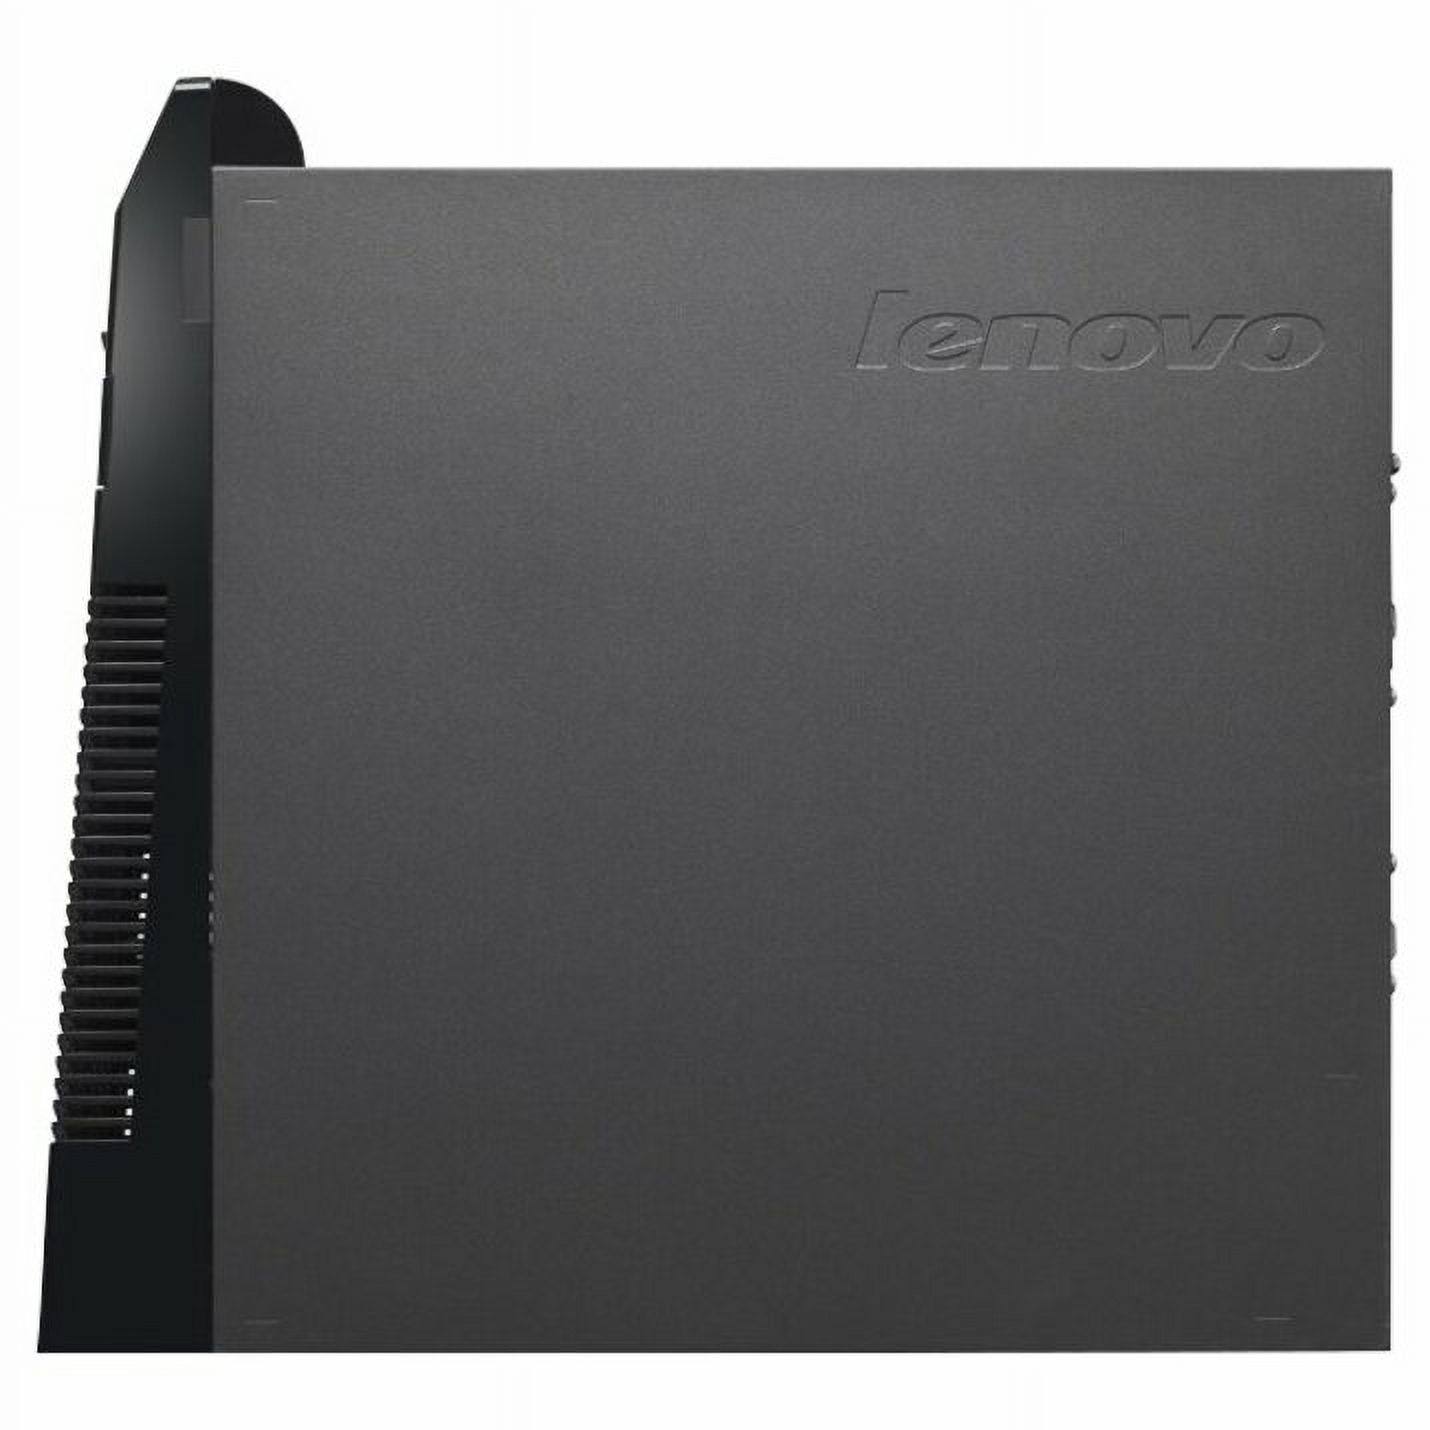 Lenovo ThinkCentre Desktop Tower Computer, Intel Core i3 i3-4130, 4GB RAM, 500GB HD, DVD Writer, Windows 7 Professional, 10B00006US - image 3 of 7